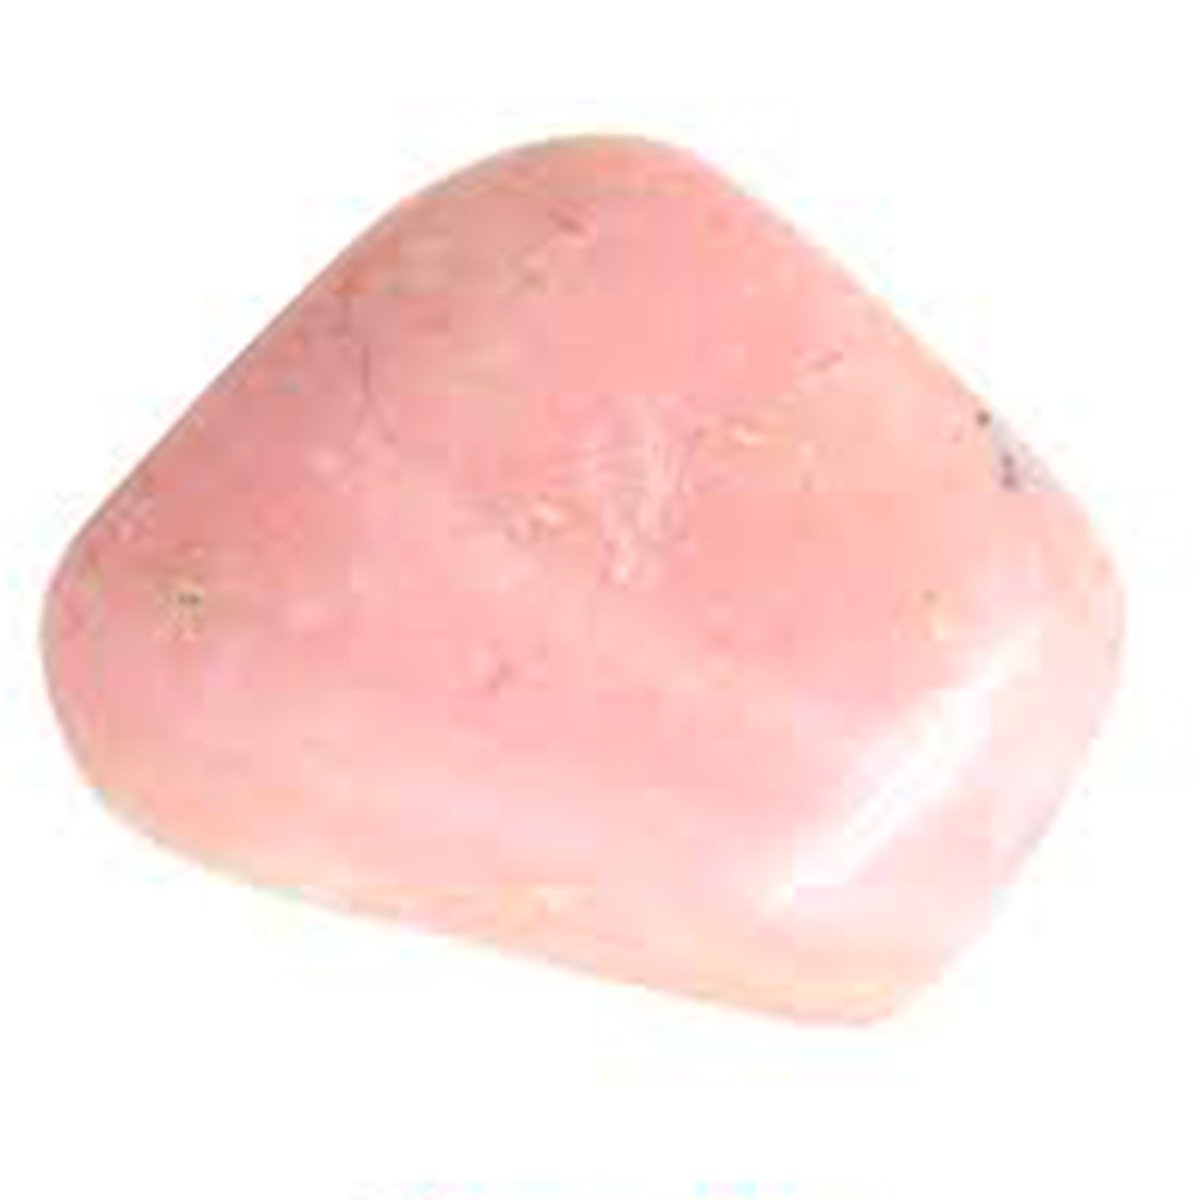 Pink opal stone